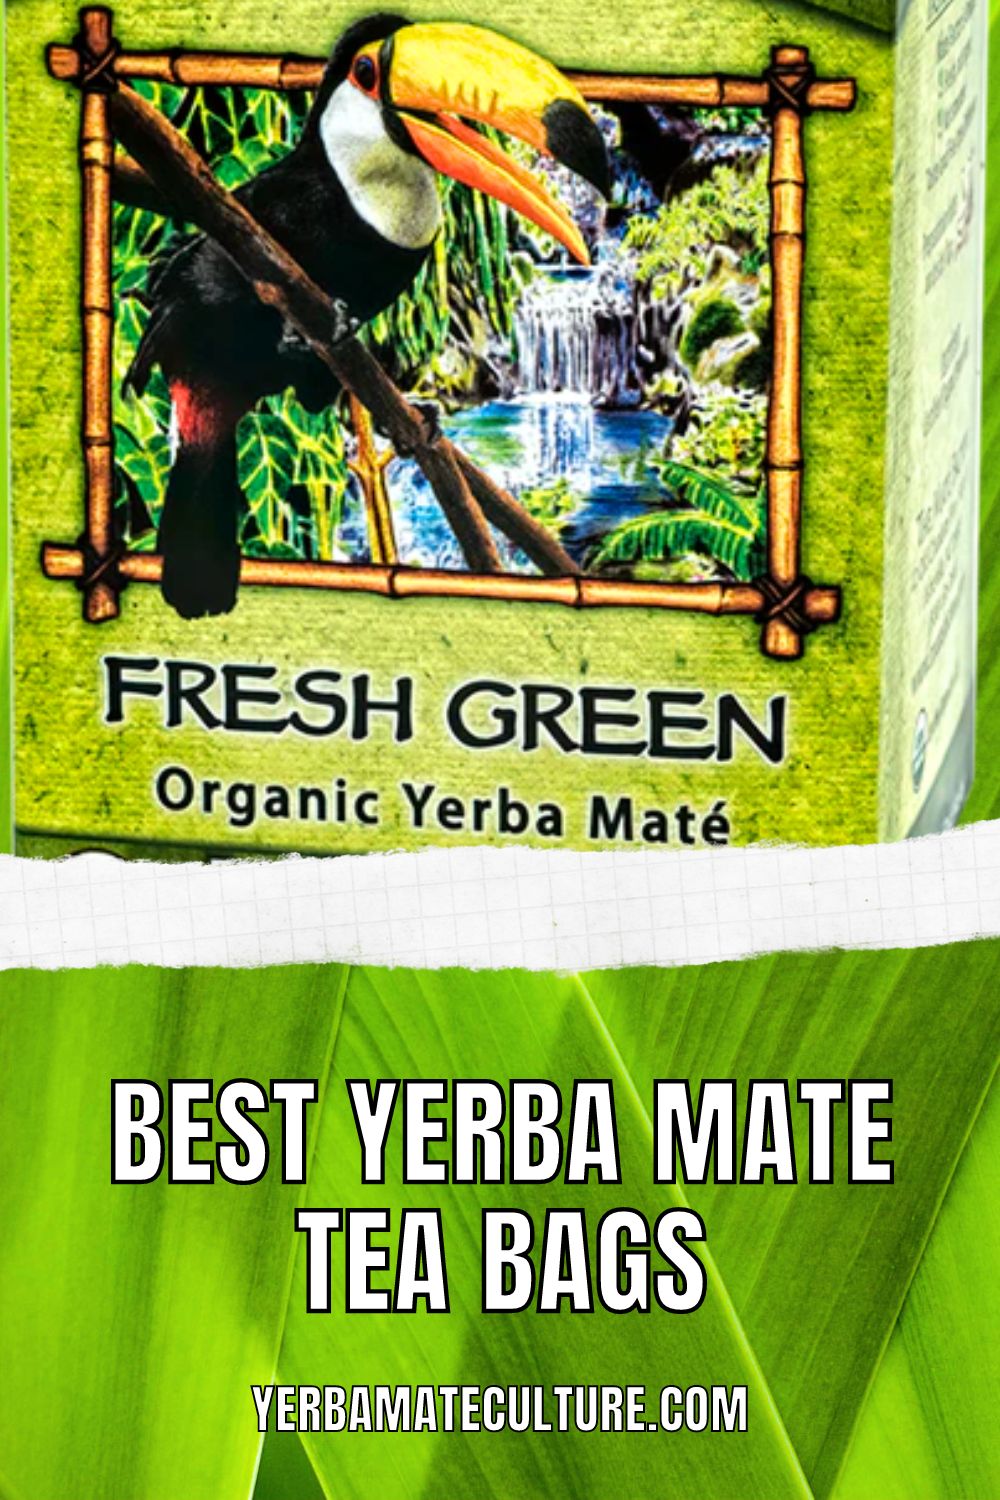 Yerba mate tea bags